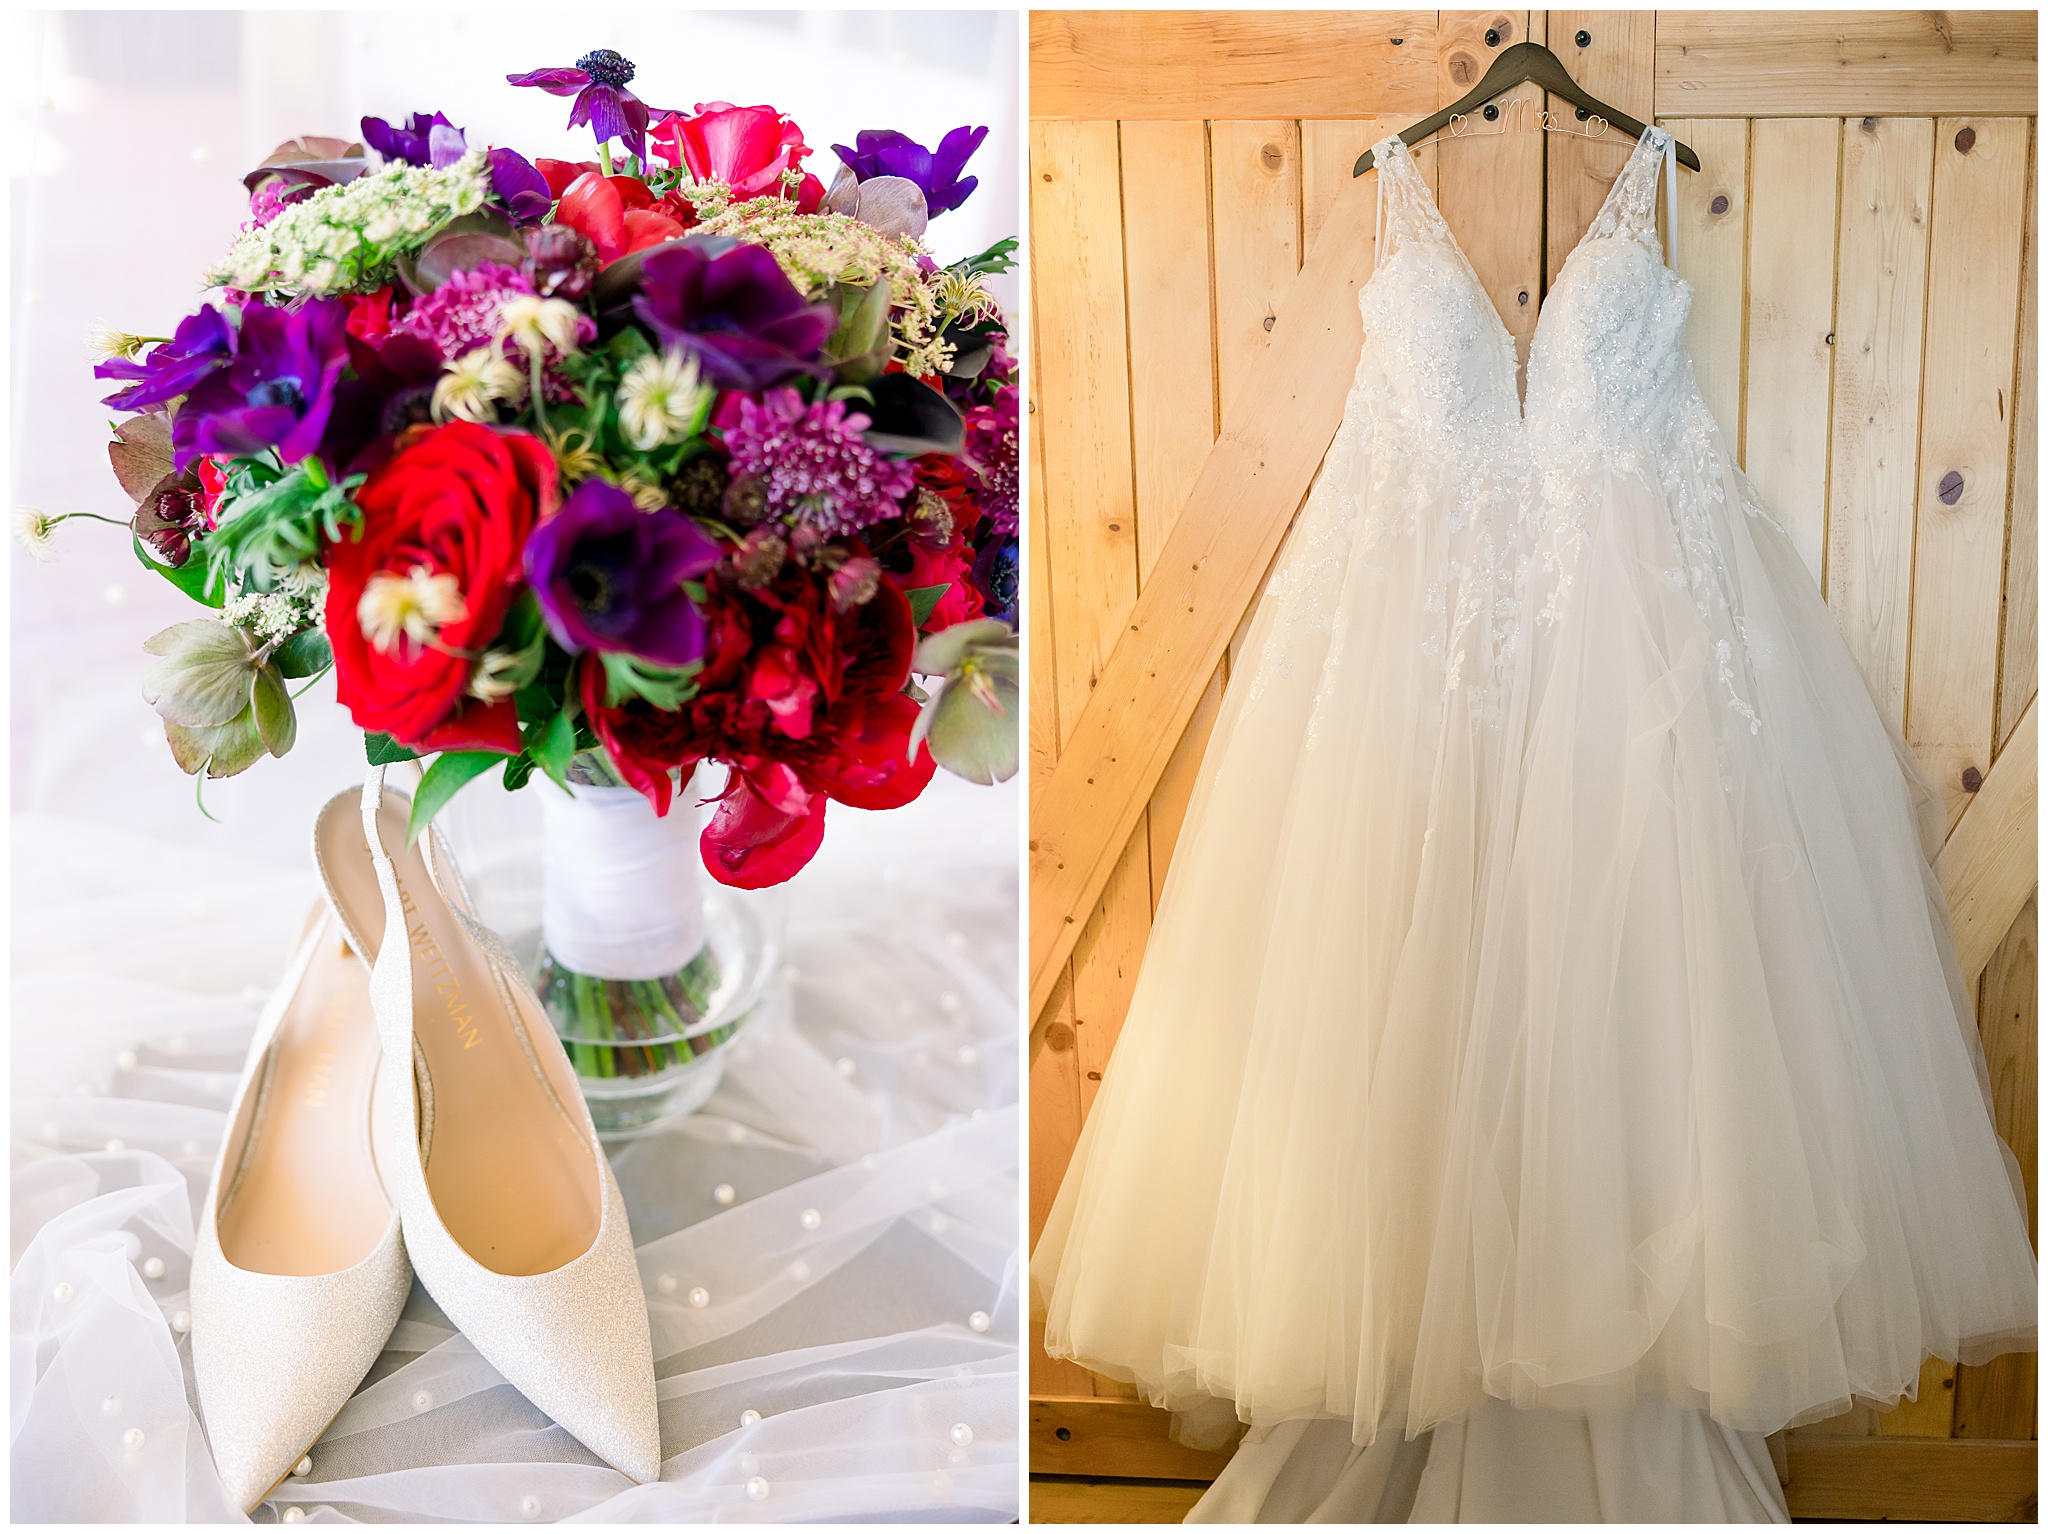 pink, red, purple bouquet, wedding dress hanging, wedding shoes